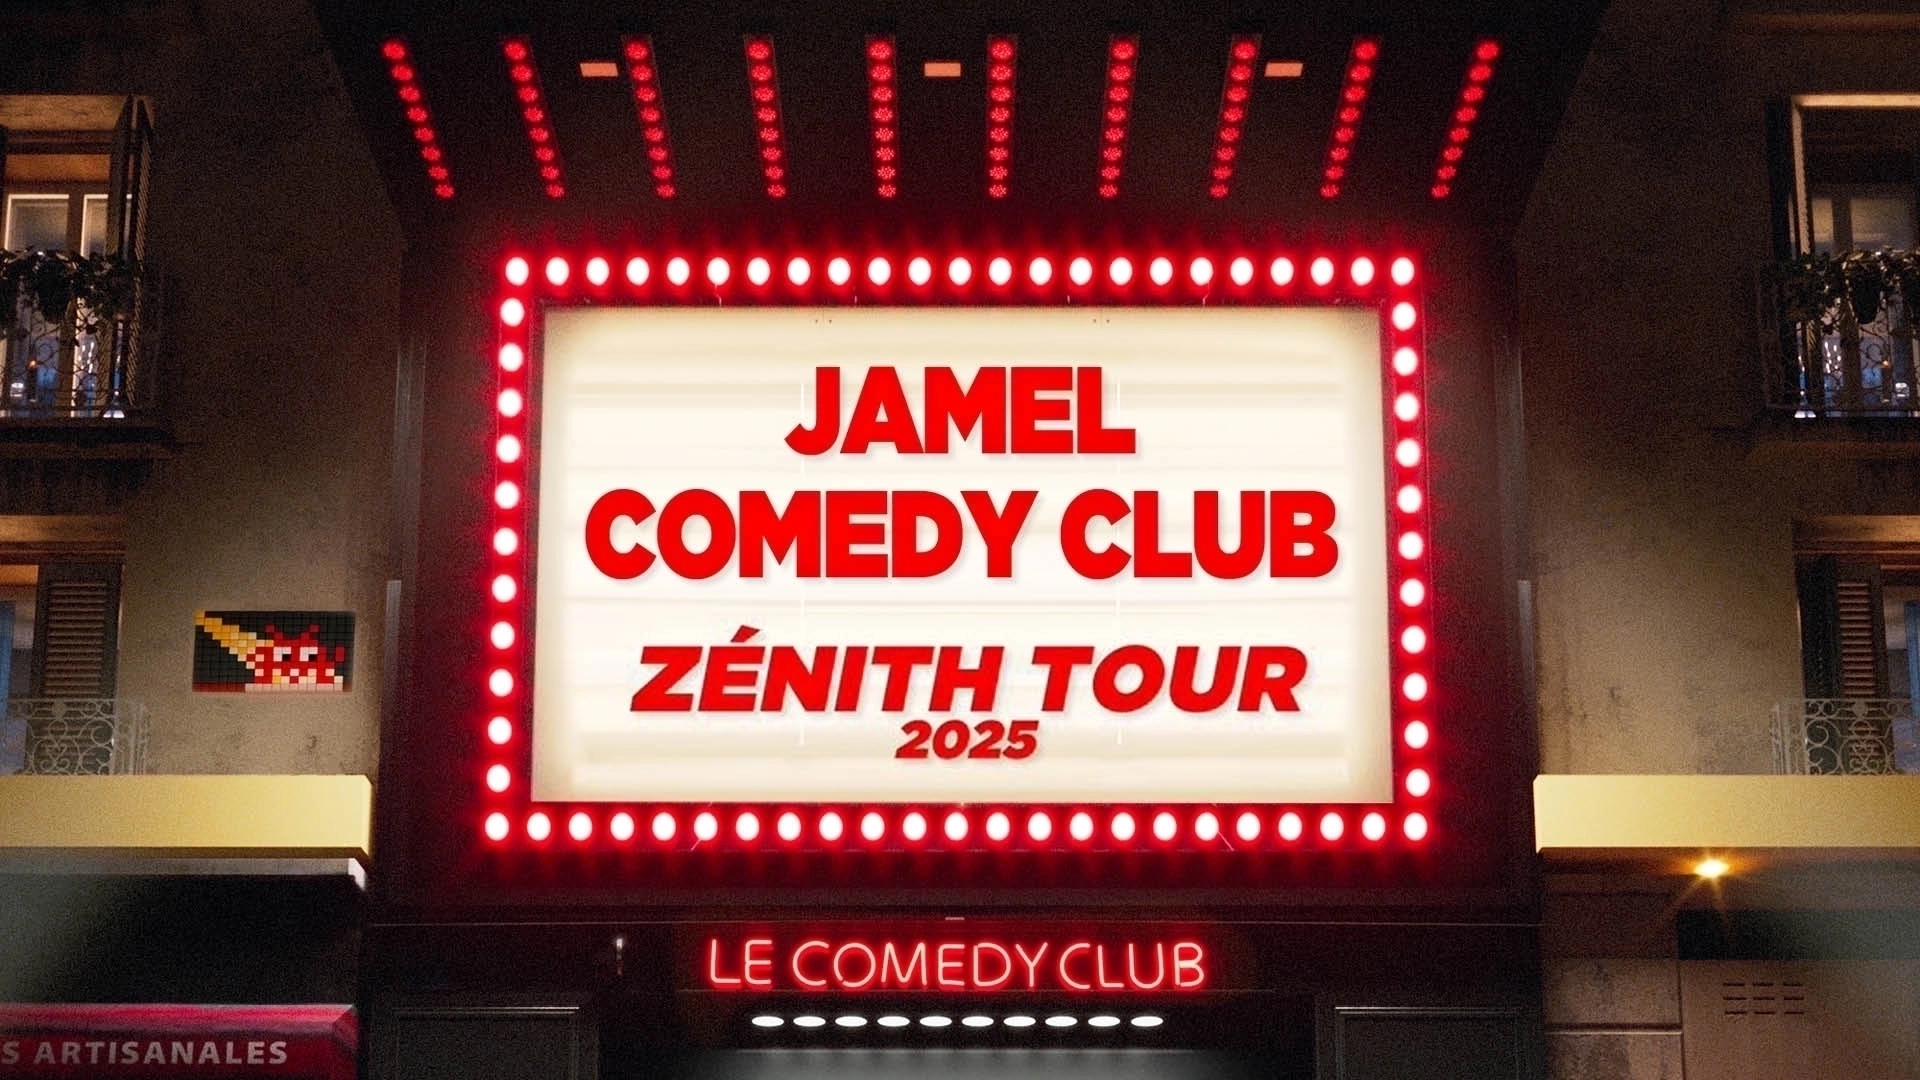 Jamel Comedy Club Zenith Tour 2025 at Arena Futuroscope Tickets